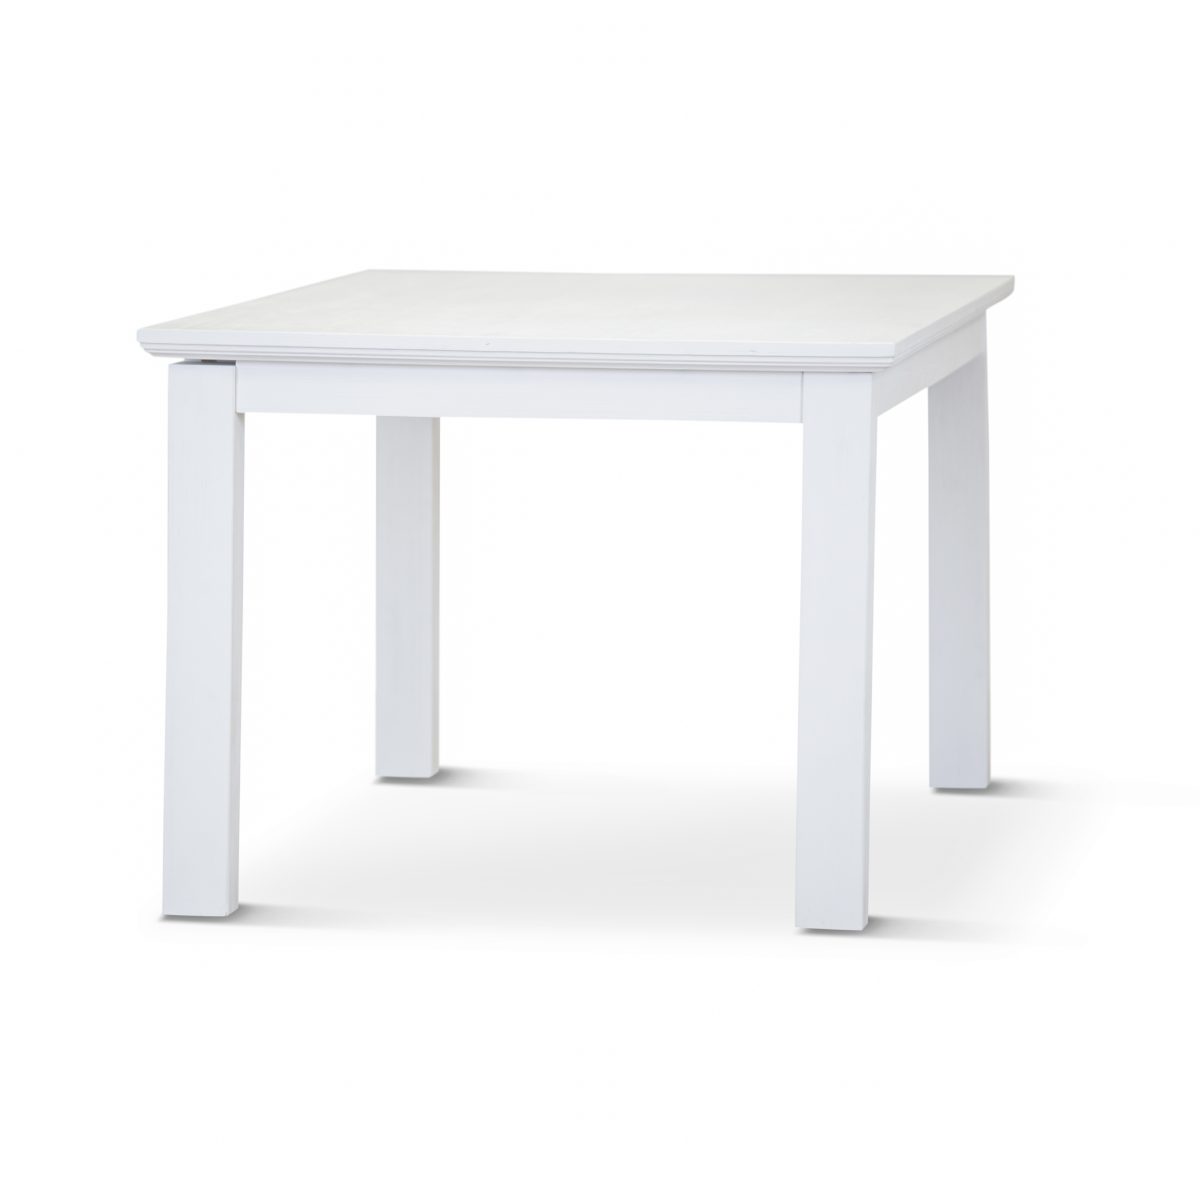 Laelia Dining Table Solid Acacia Timber Wood Coastal Furniture – White – 180x100x77 cm